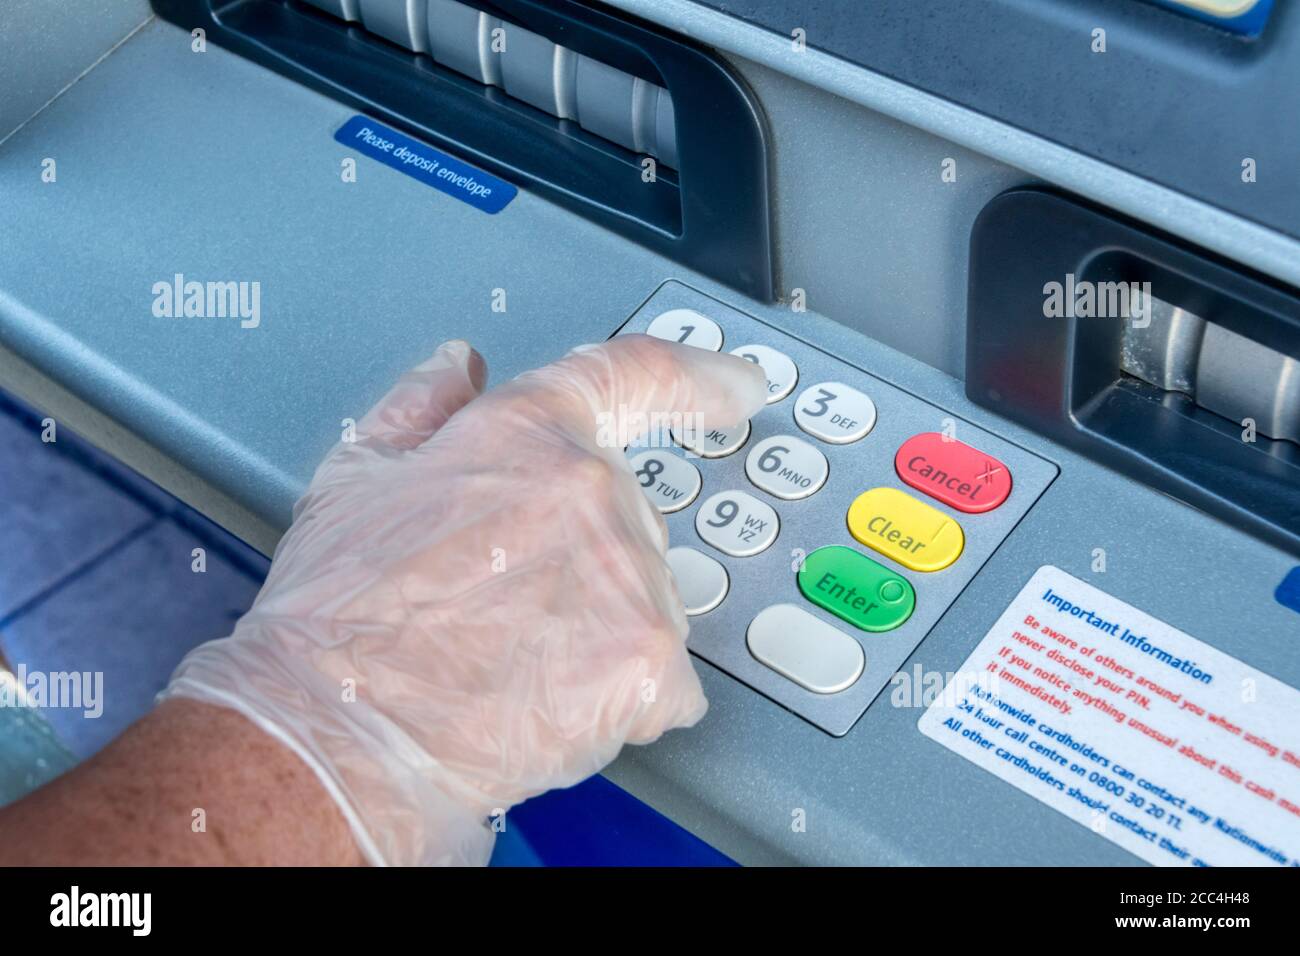 Woman wearing protective plastic glove to operate cash machine during 2020 coronavirus COVID-19 pandemic. Stock Photo